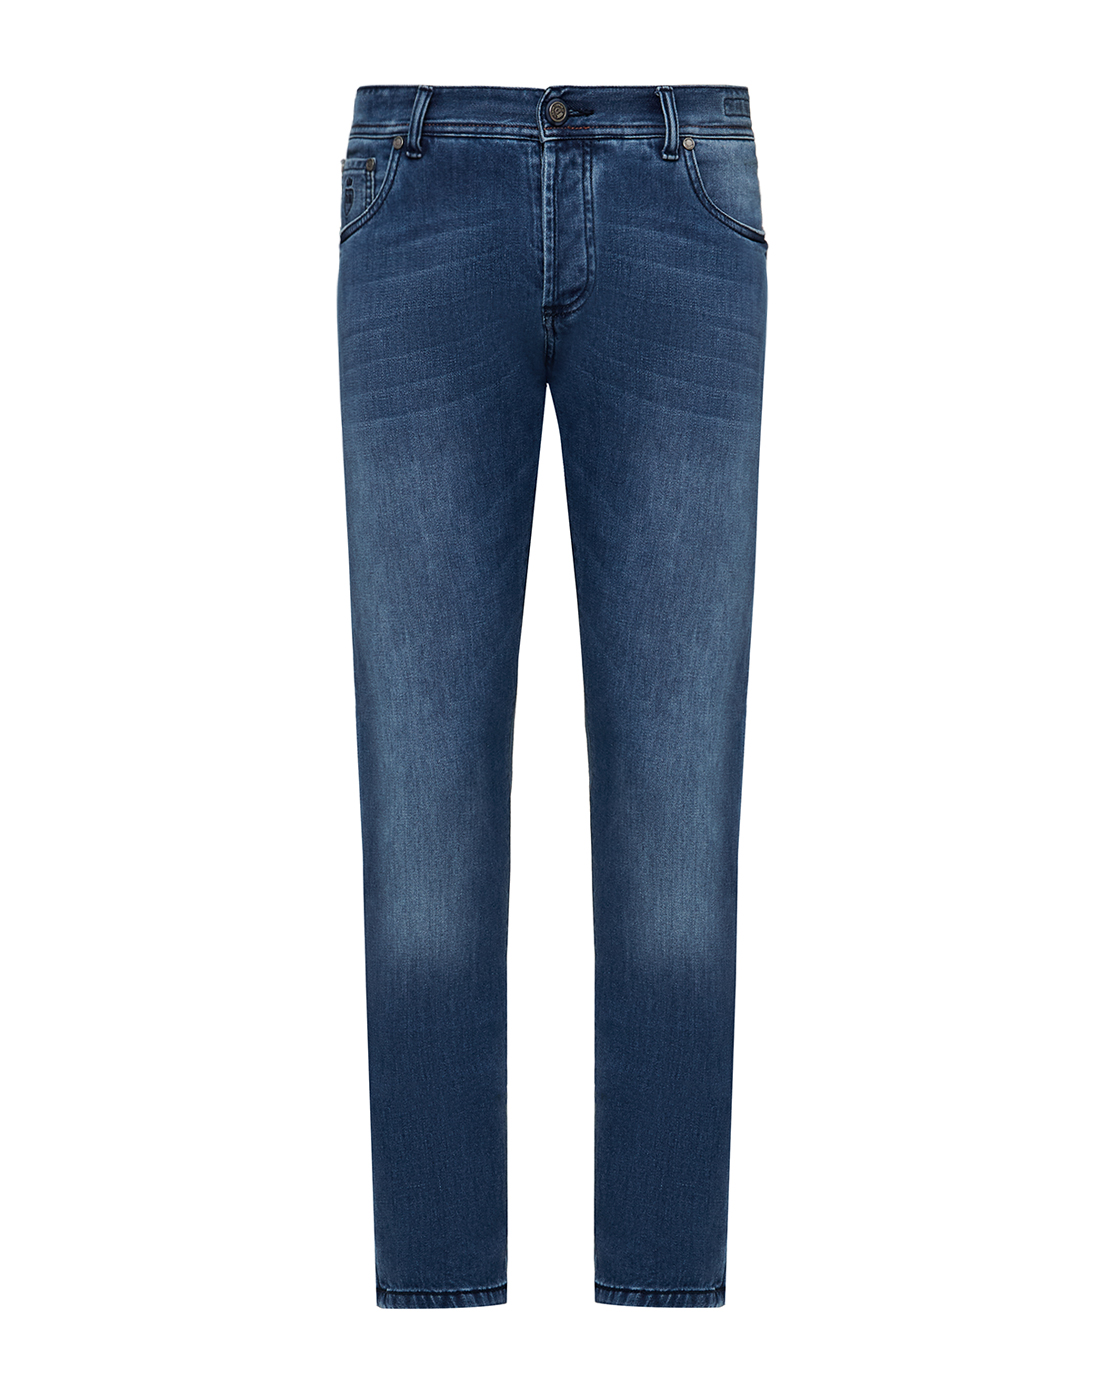 Мужские синие джинсы Richard J. Brown ST27.W346-1